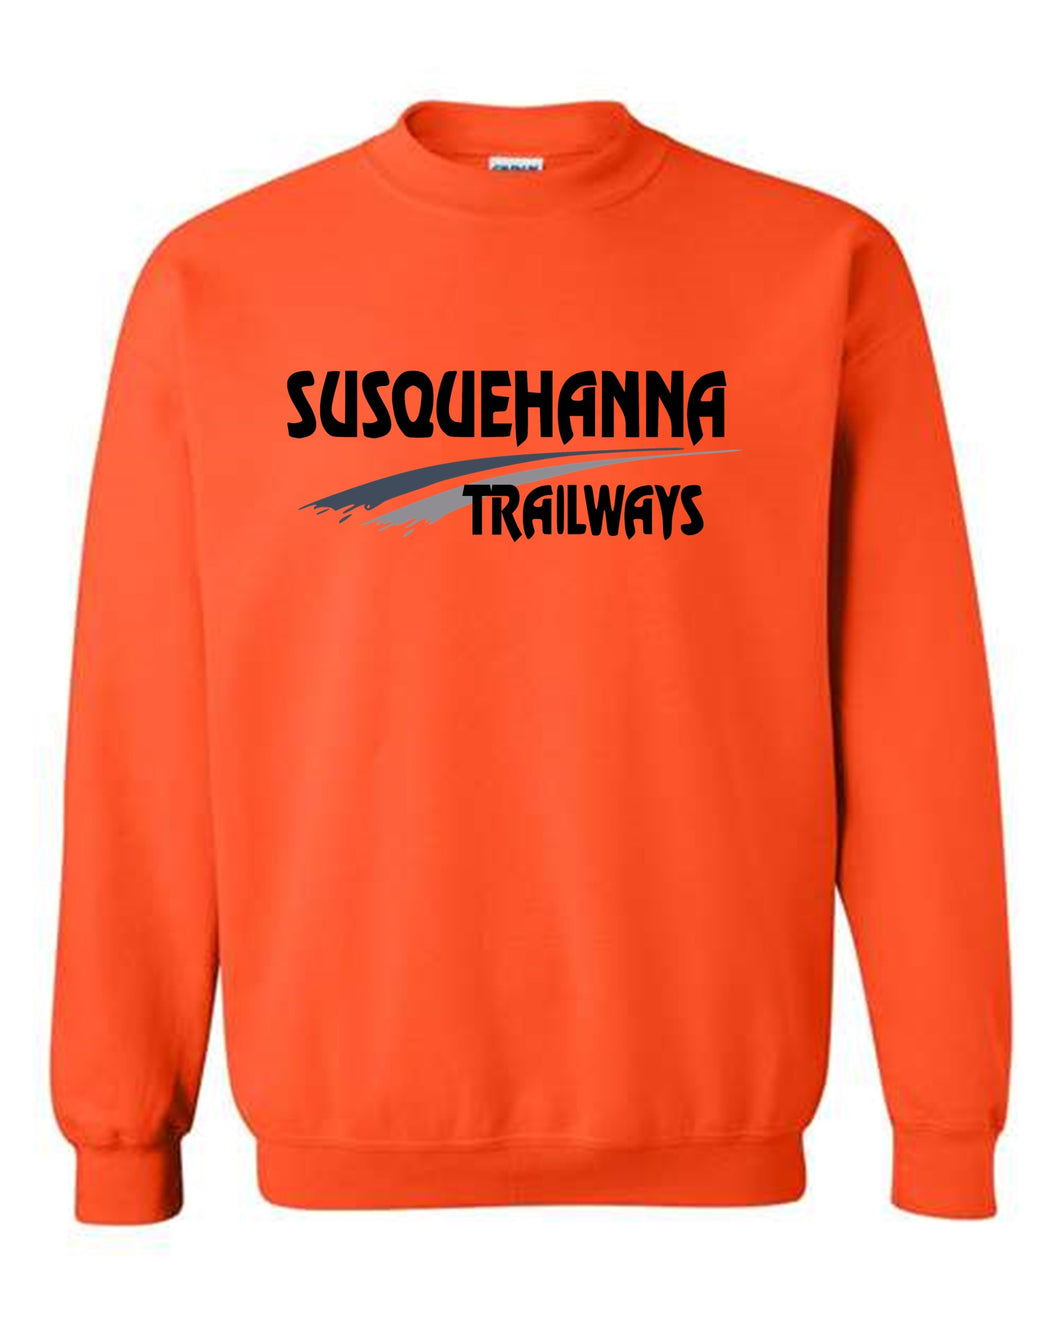 Susquehanna Trailways Crewneck Sweatshirt - Adult Sizes Only